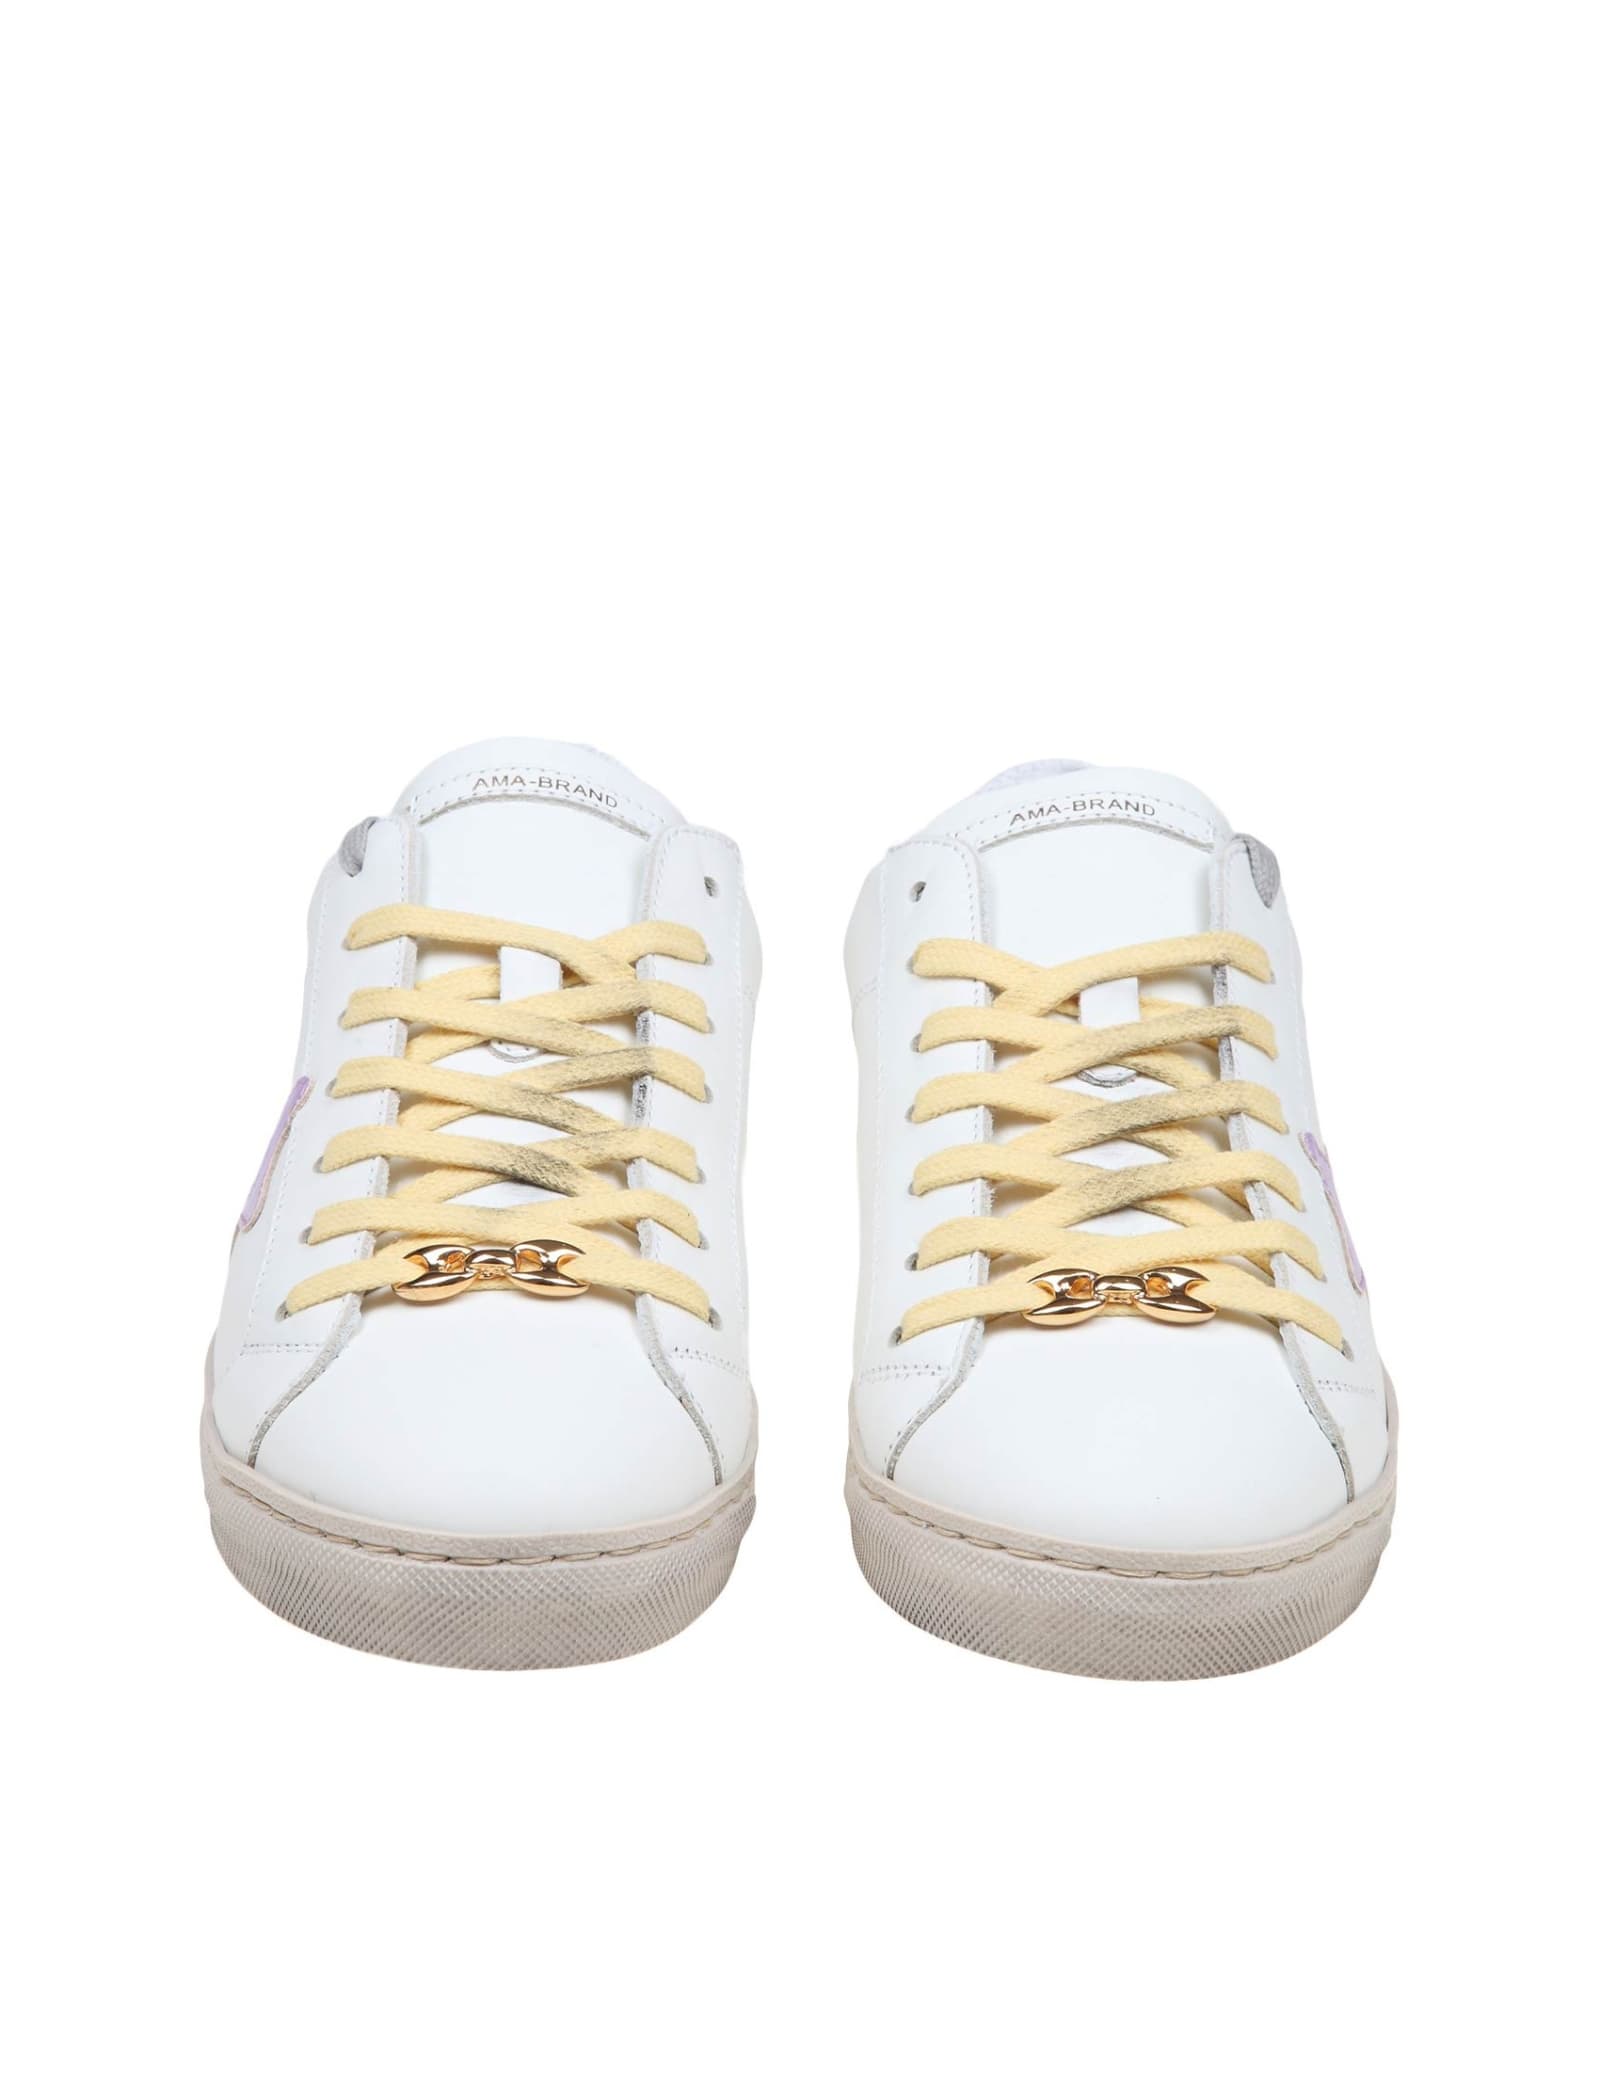 Shop Ama Brand Sneakers In White Leather And Glicine In White/multicolor